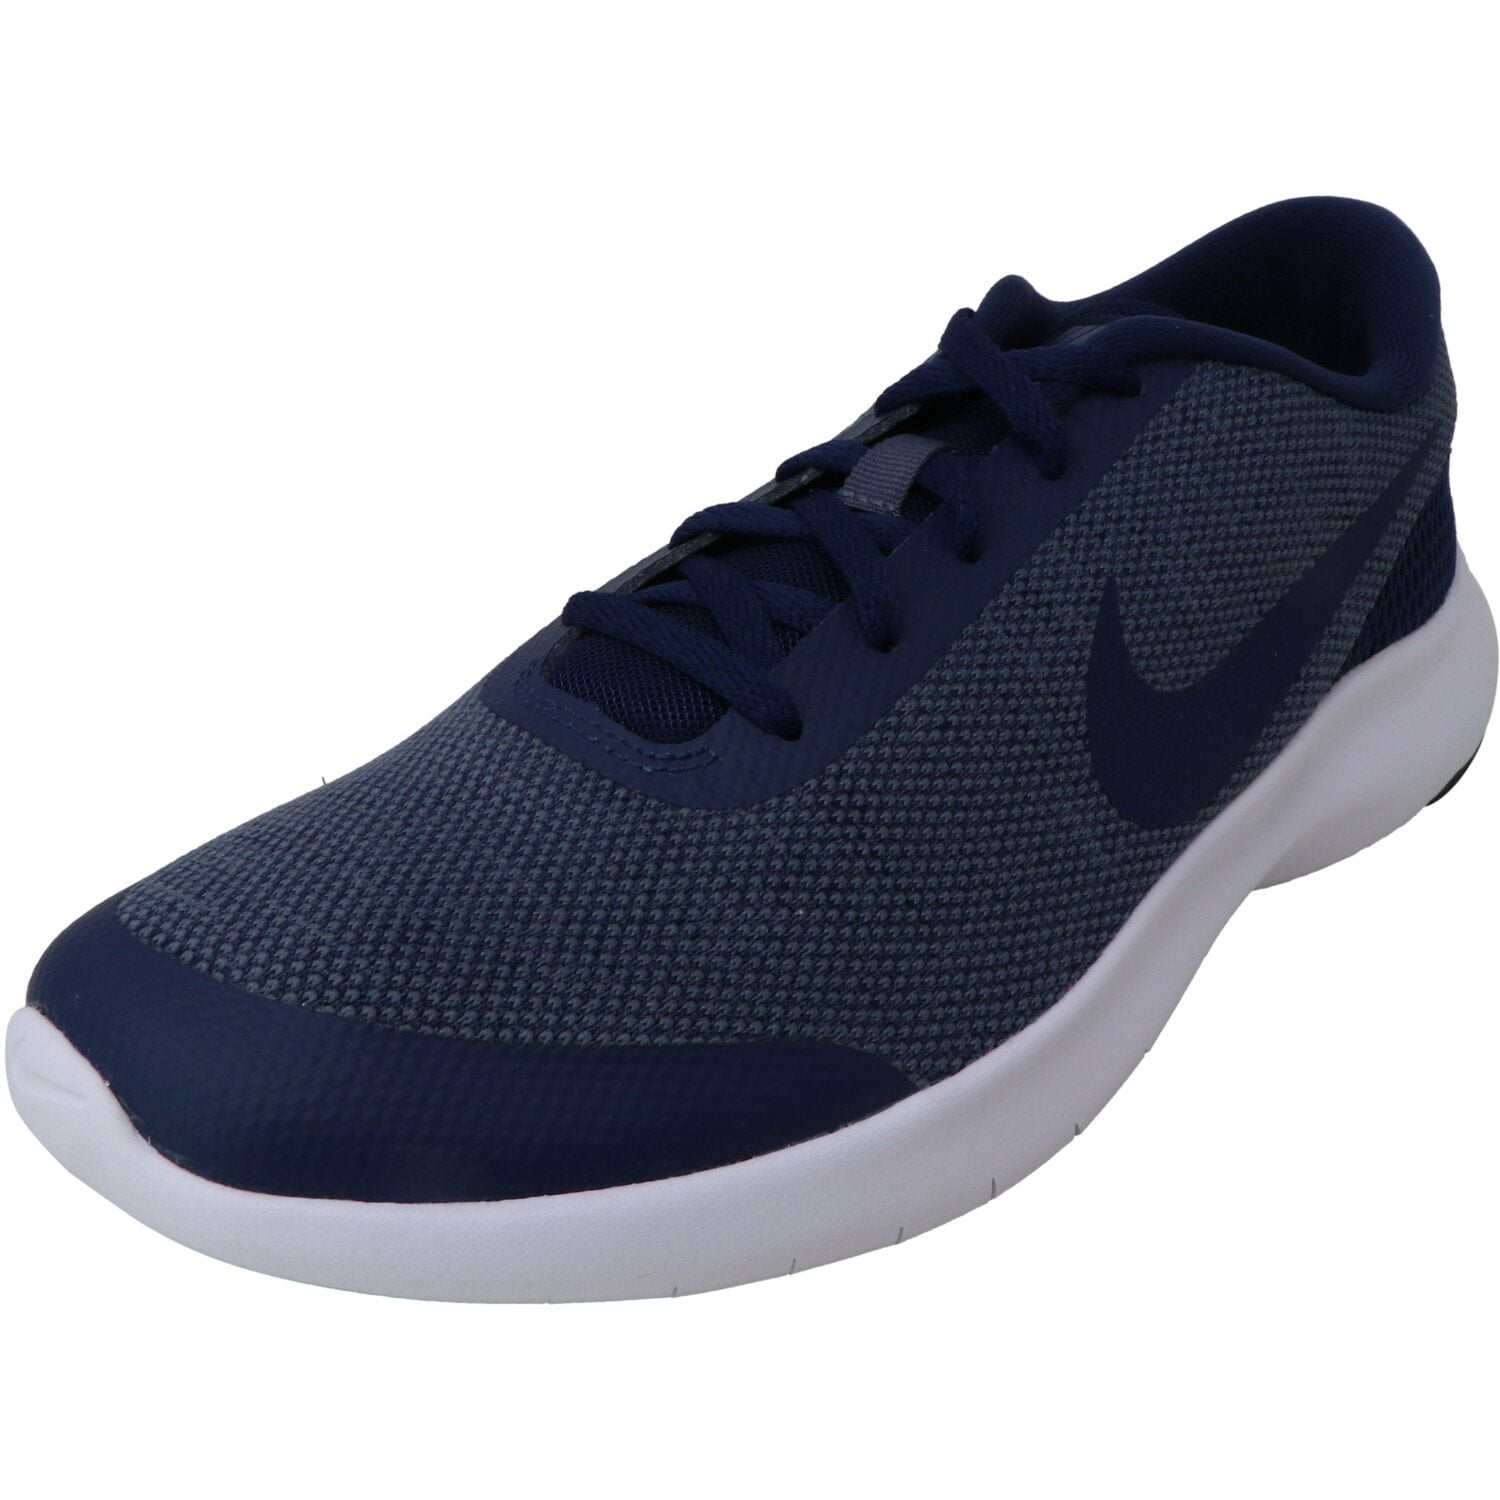 Nike - Nike Flex Experience RN 7 Men?s Running Shoes - 11.5M - Midnight ...